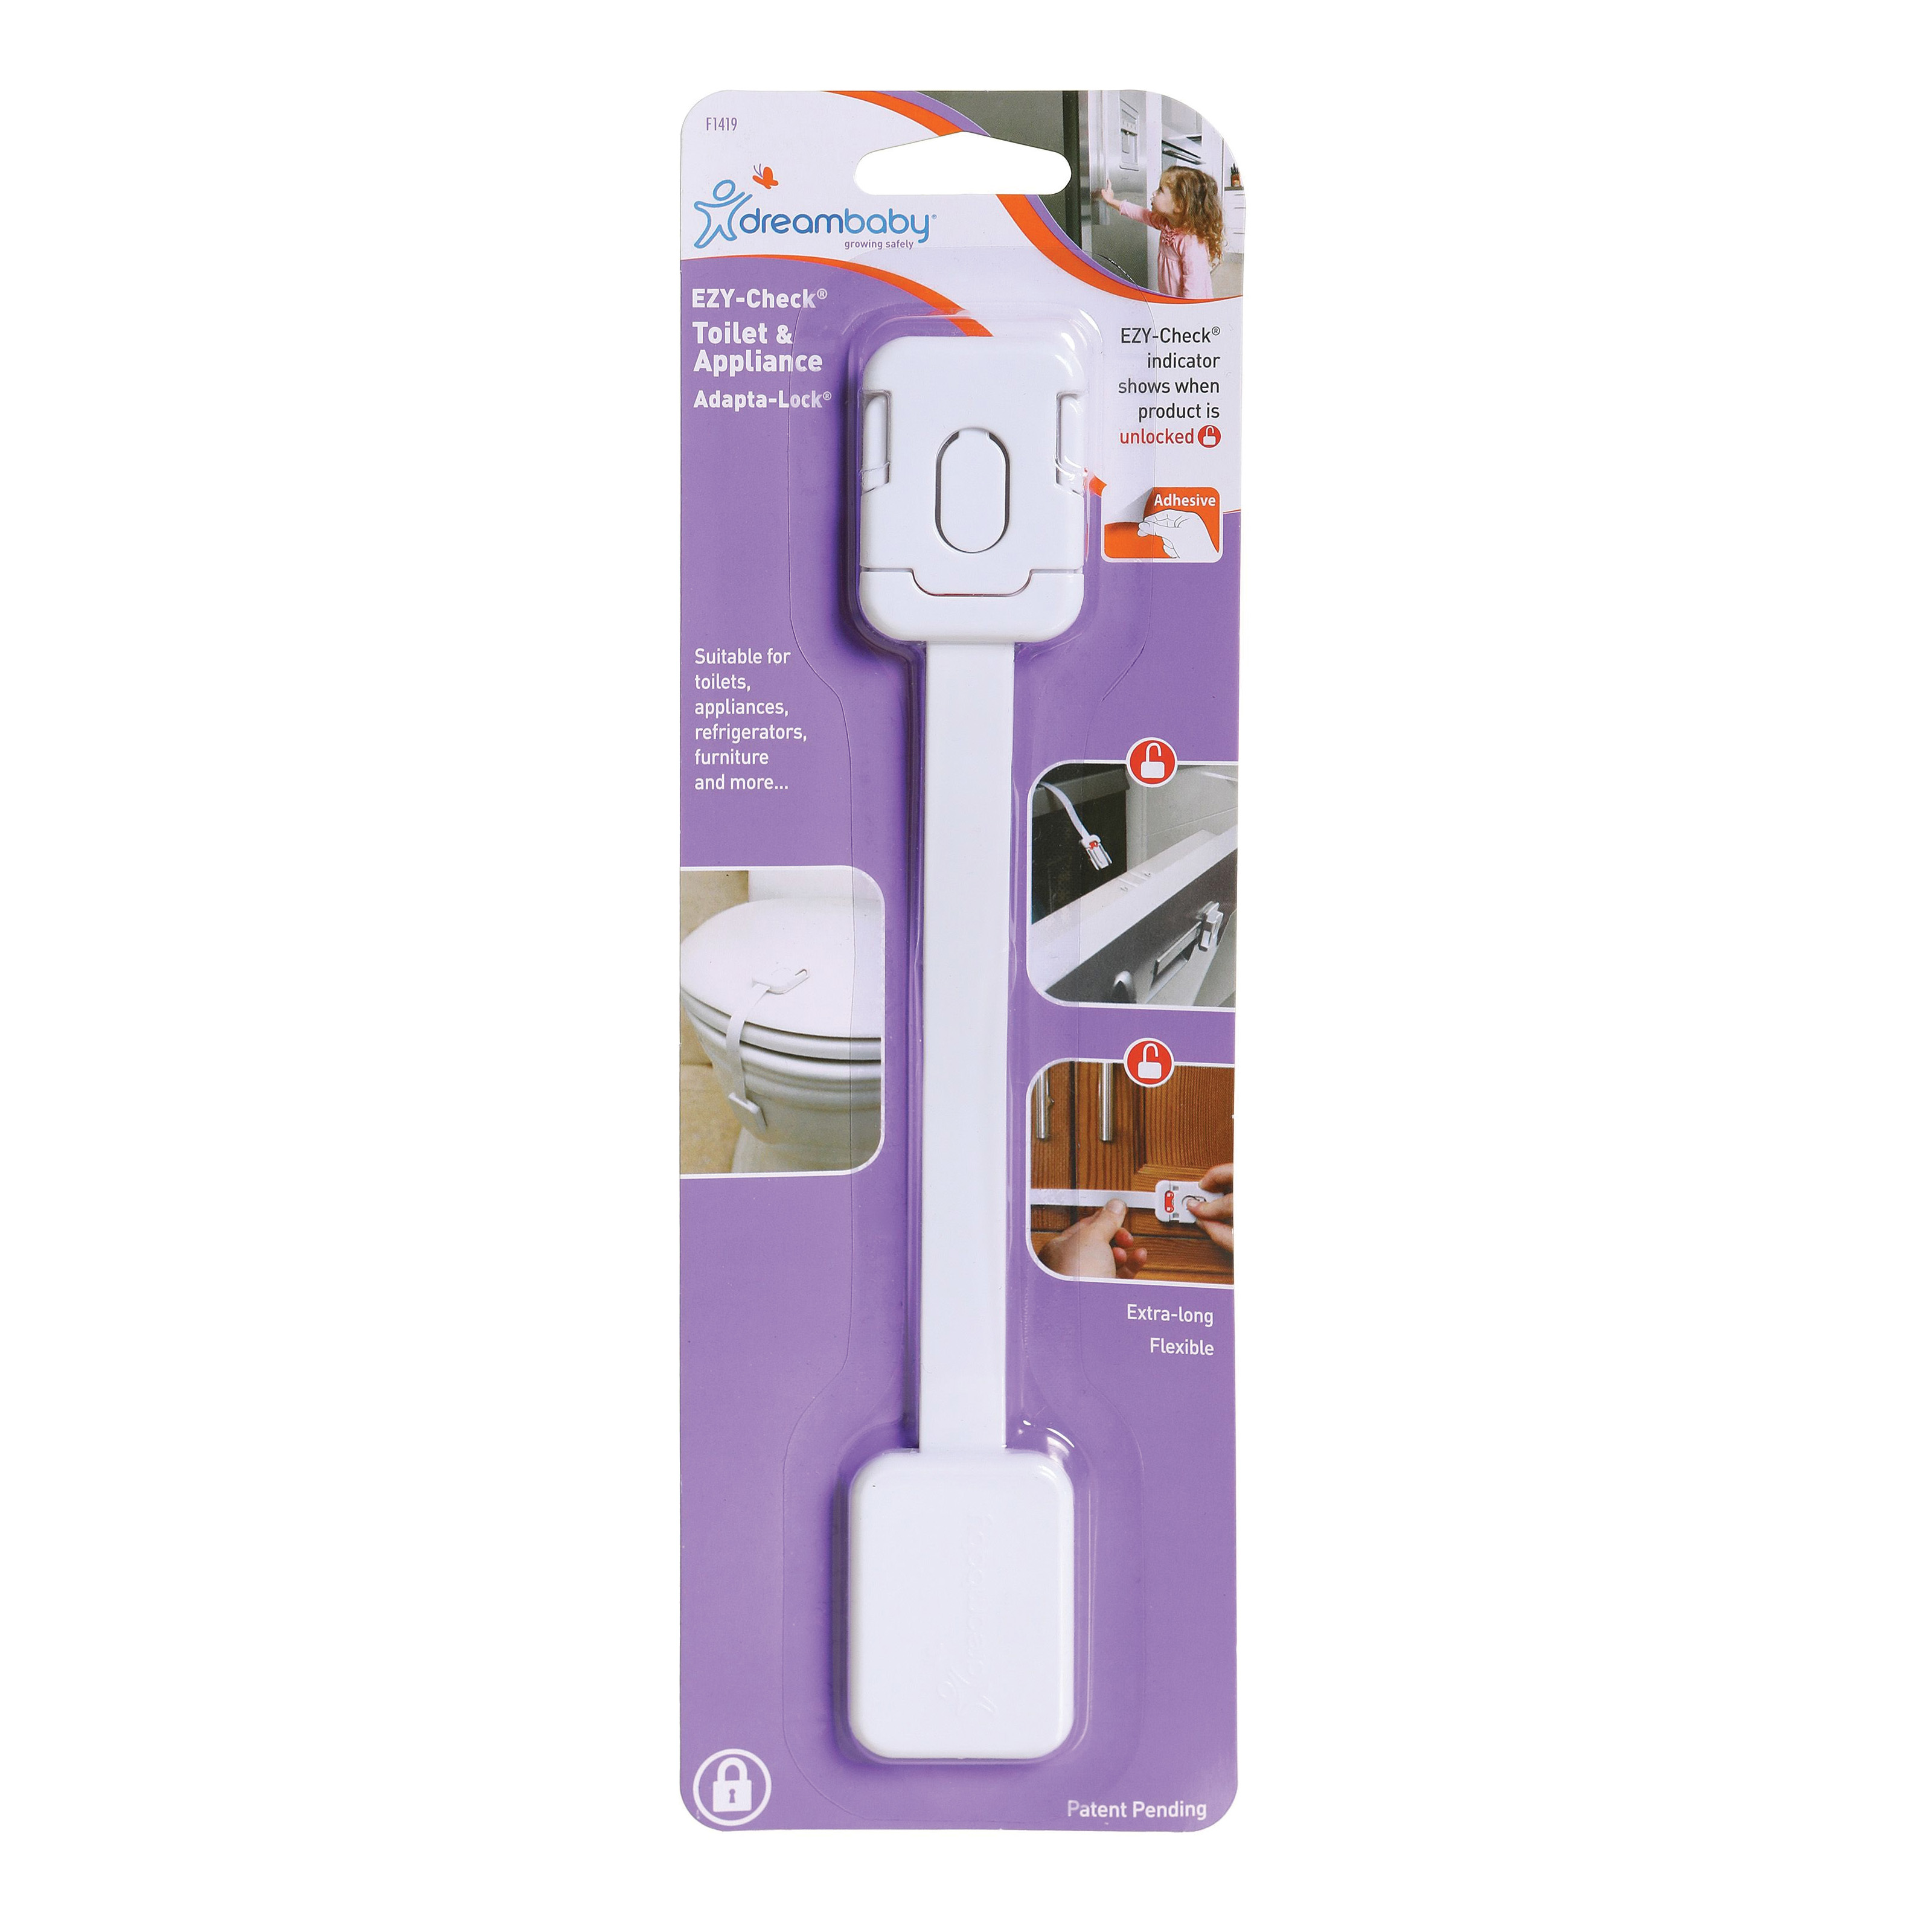 Ezy-Check L1419 Toilet and Appliance Adapta Lock